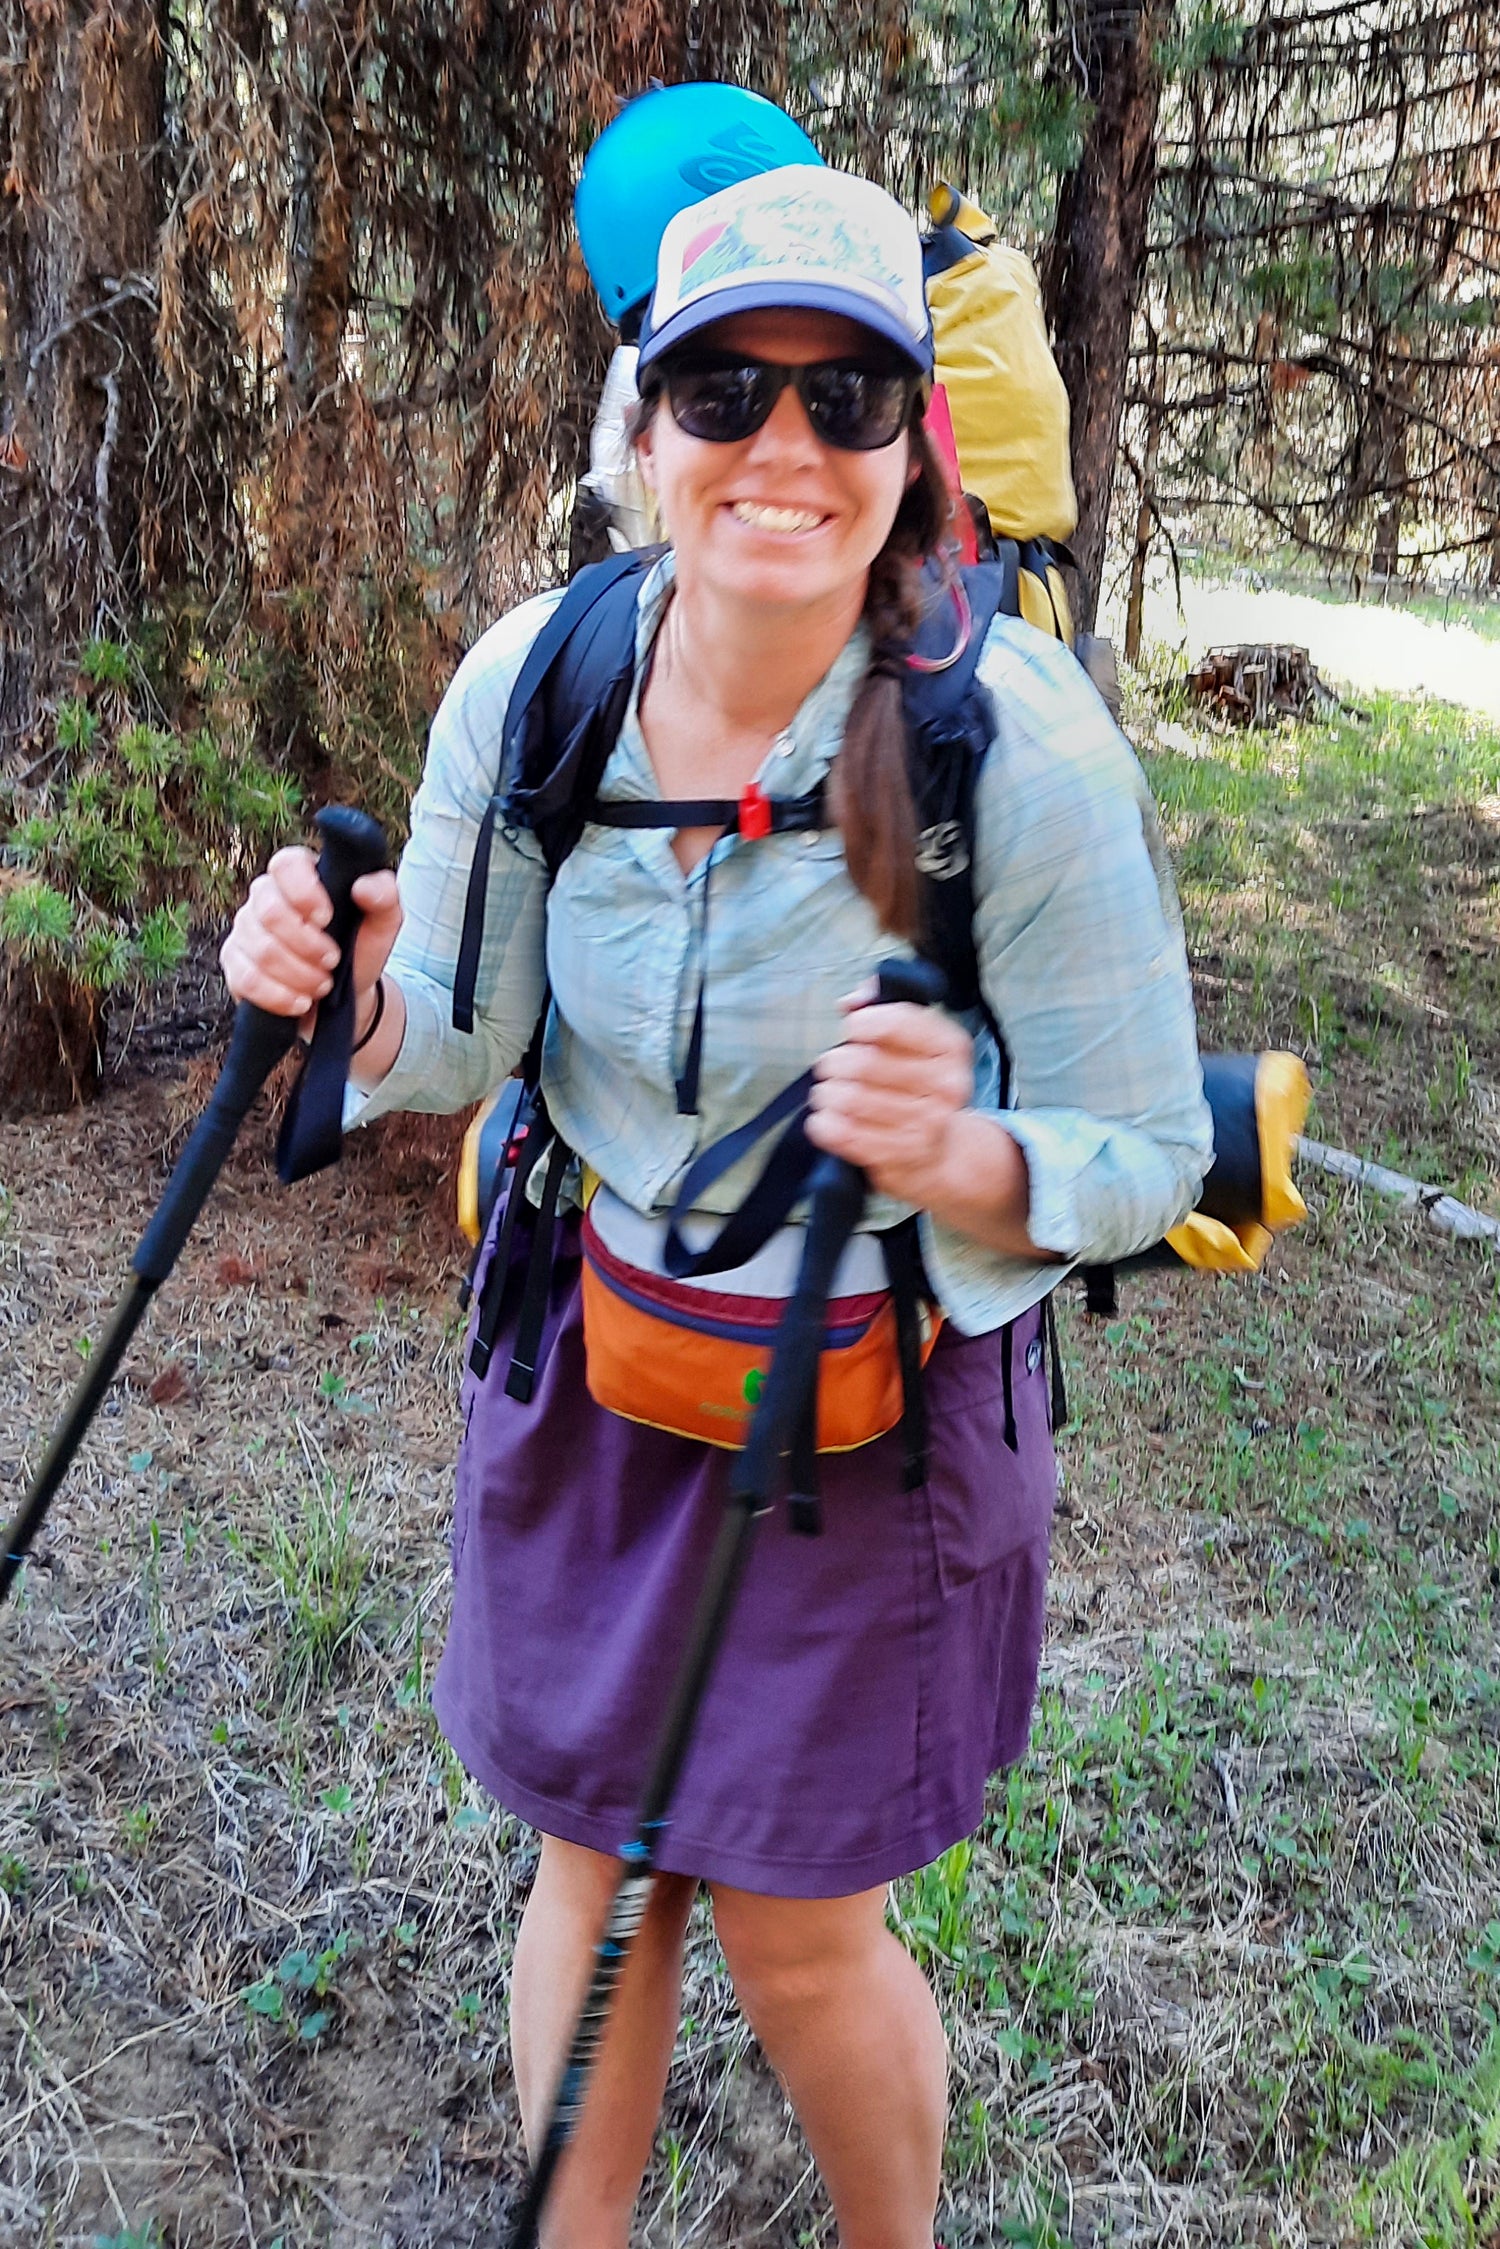 Turning Thru-Hiking into a Career by Renee "She-ra" Patrick